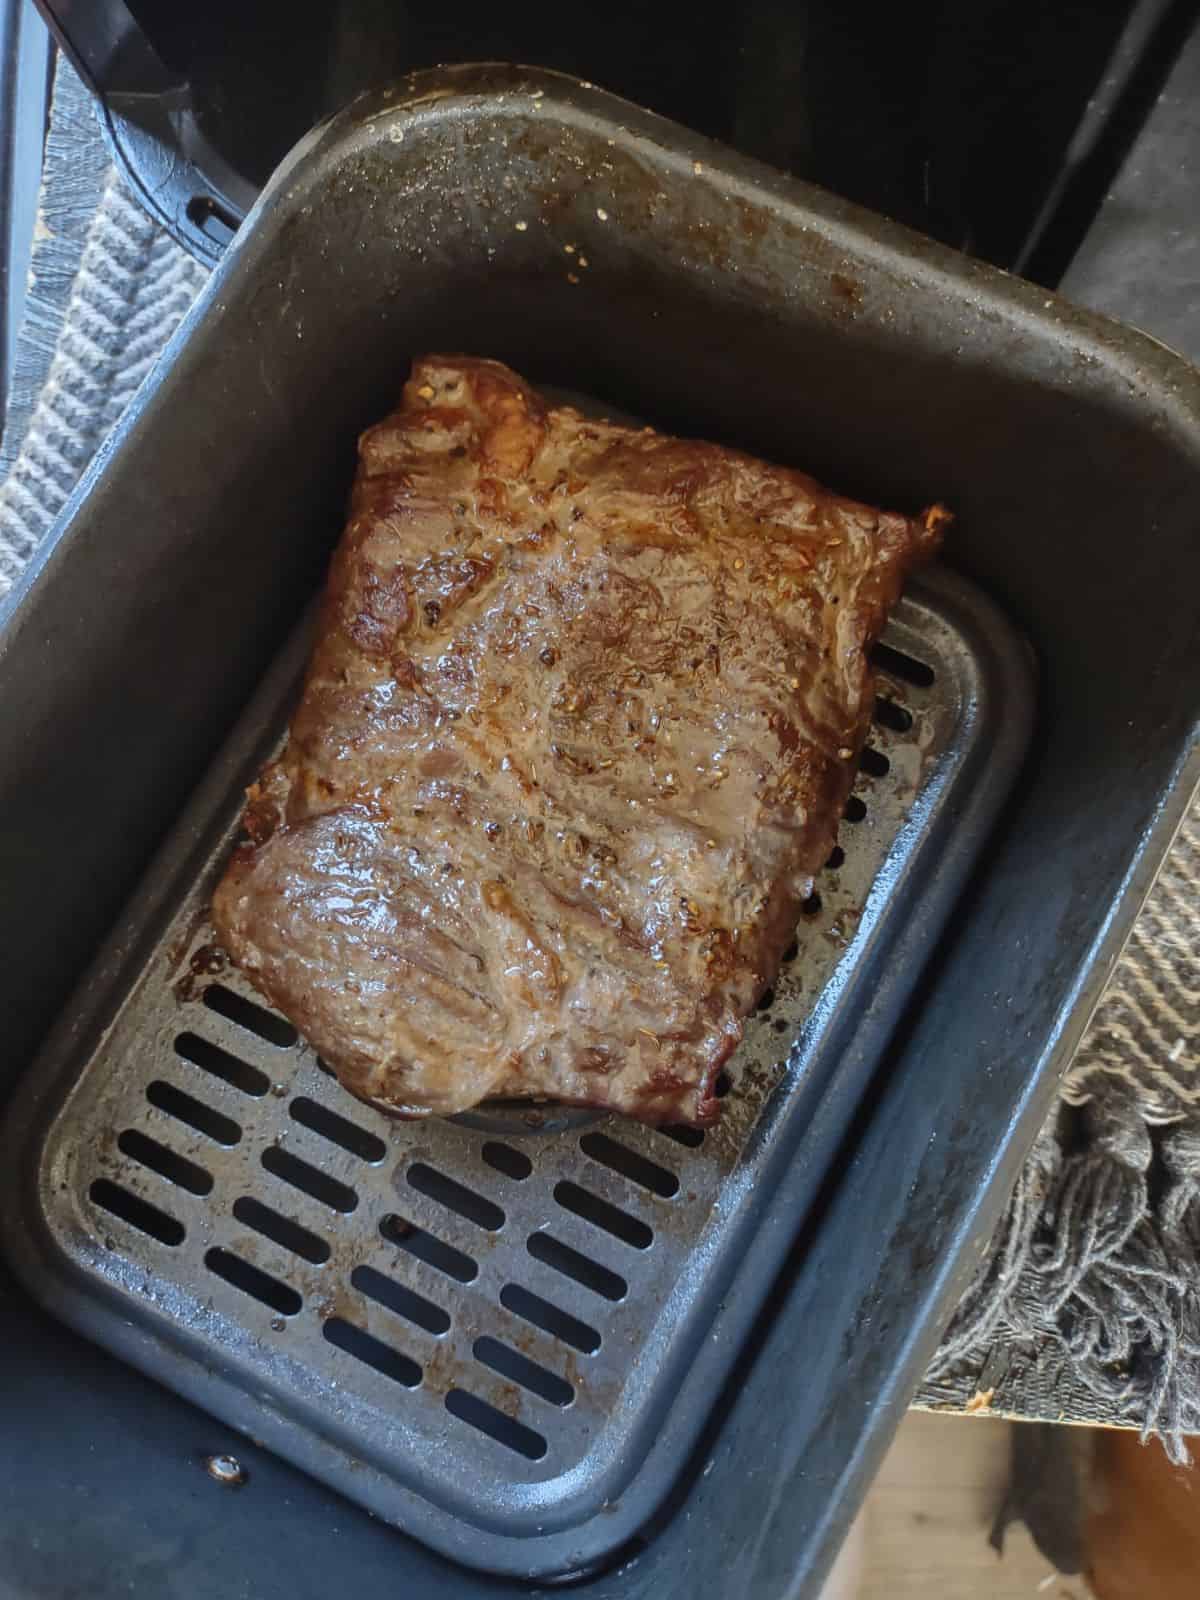 A cooked skirt steak inside a black air fryer basket.